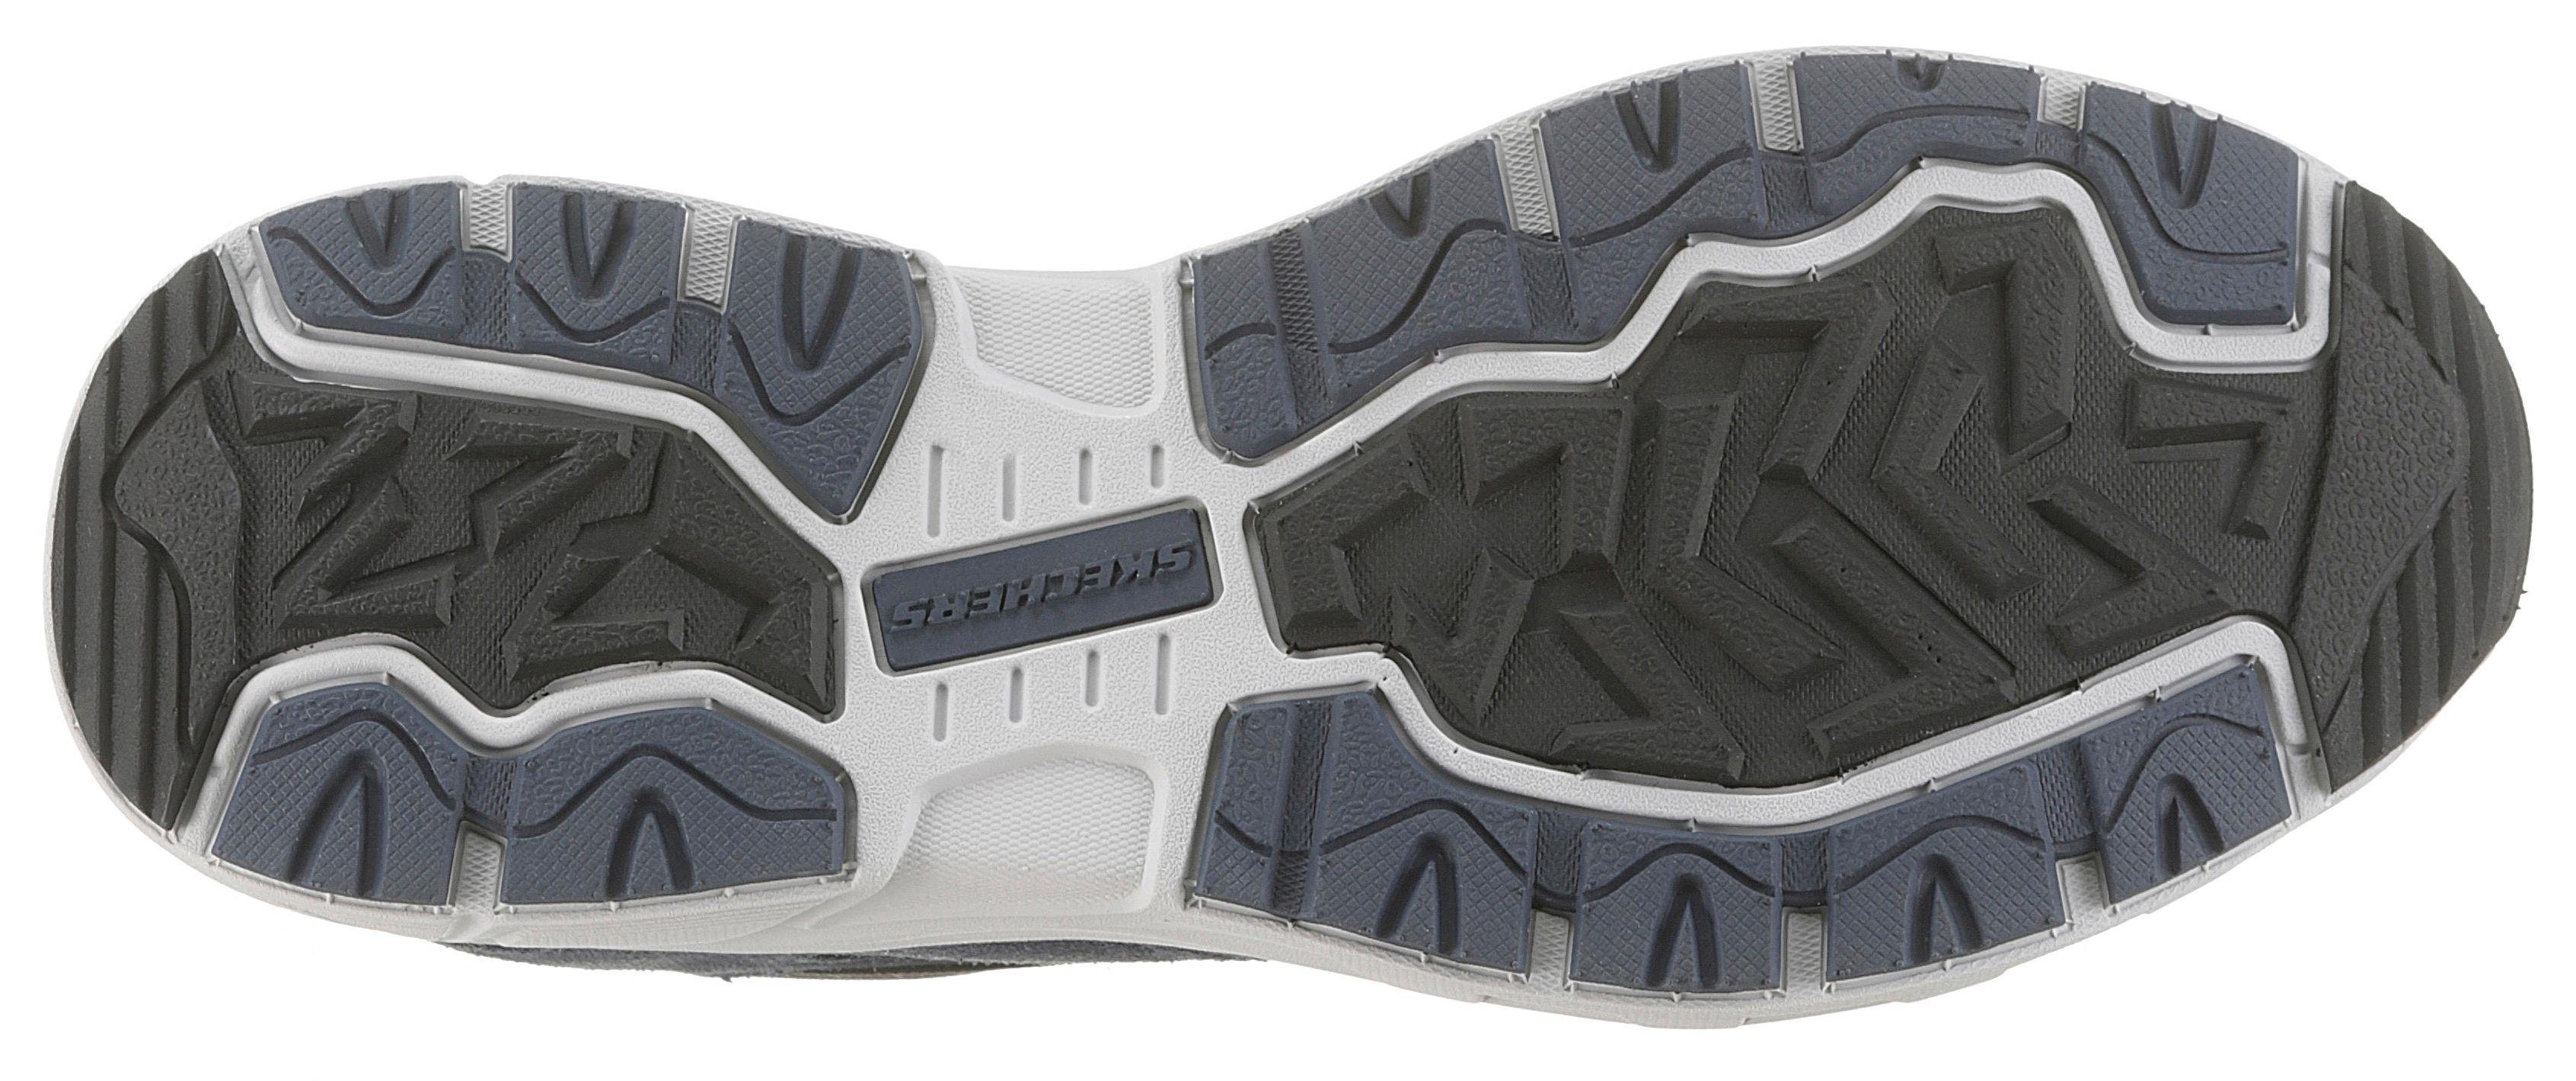 Sneaker schwarz bequemer Oak Skechers navy Canyon Foam-Ausstattung mit Memory